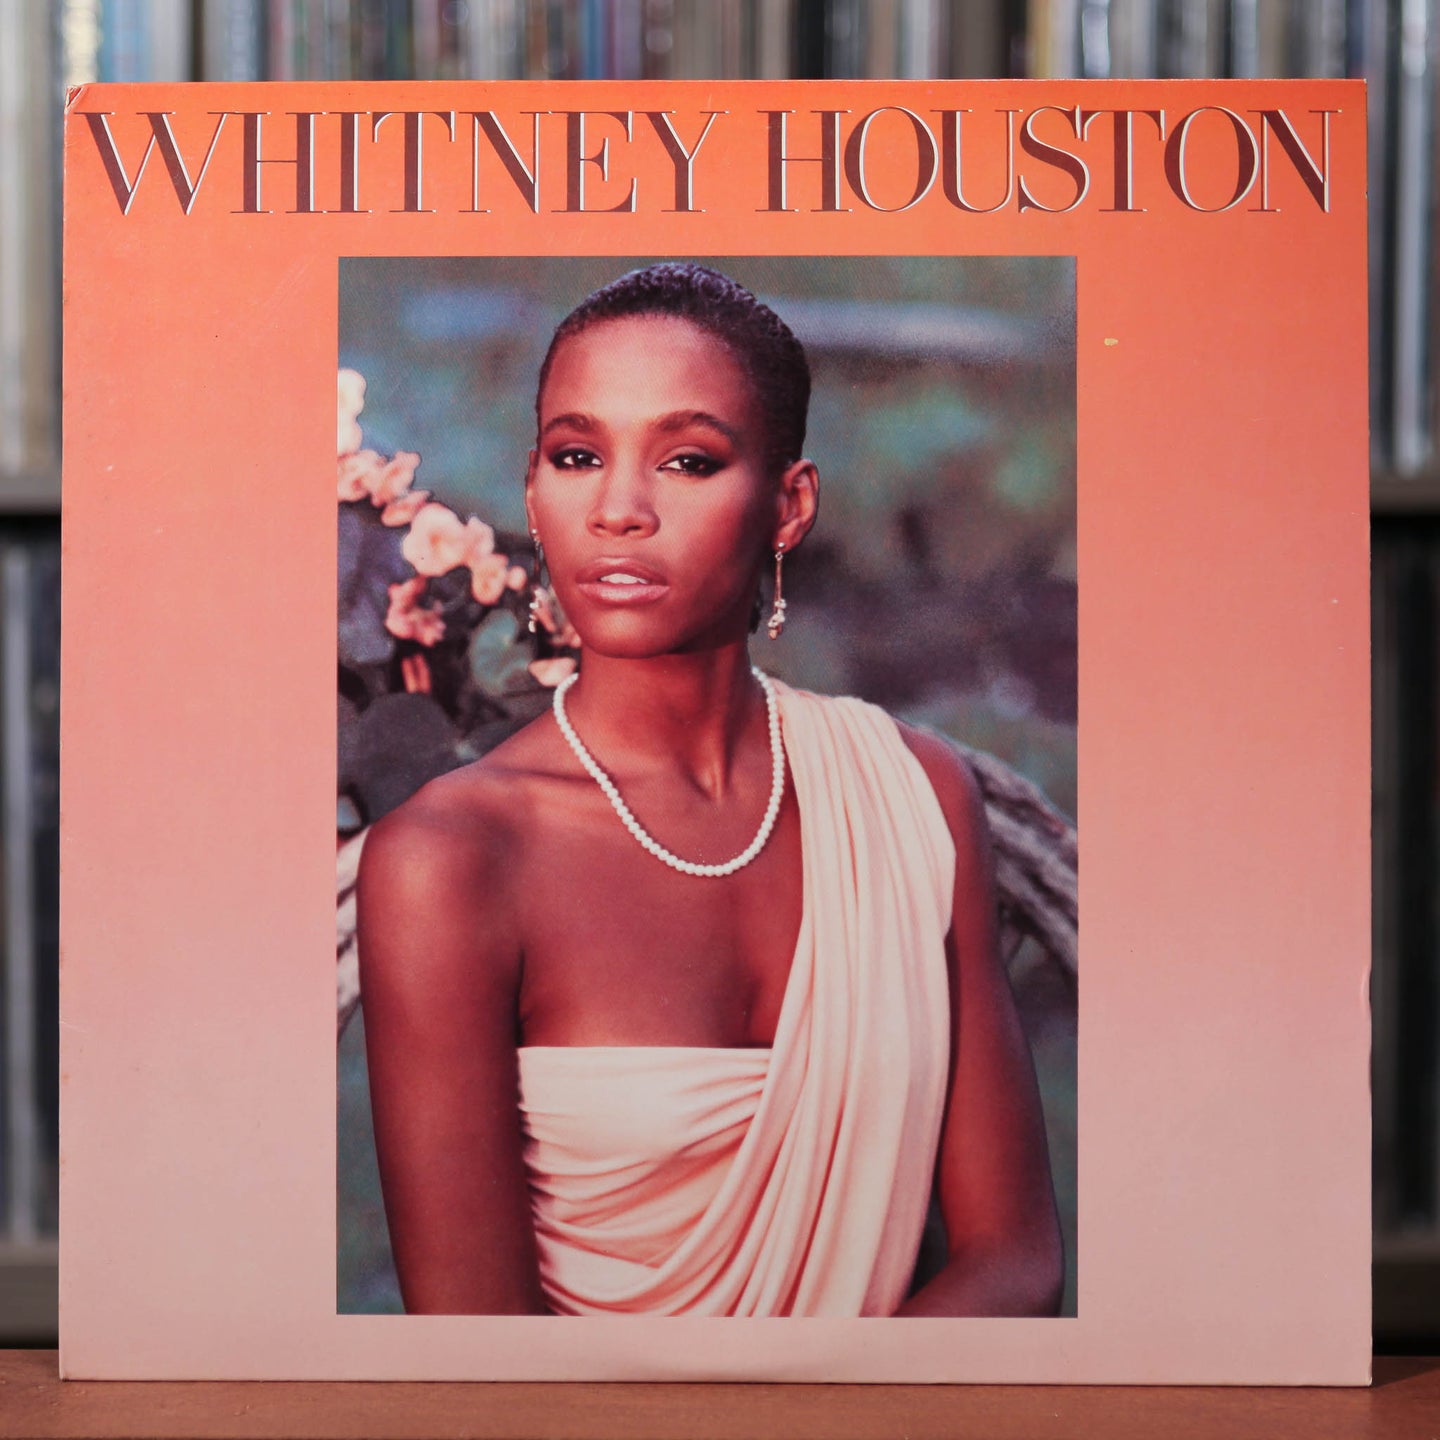 Whitney Houston - Self Titled - 1985 Arista, VG++/VG++